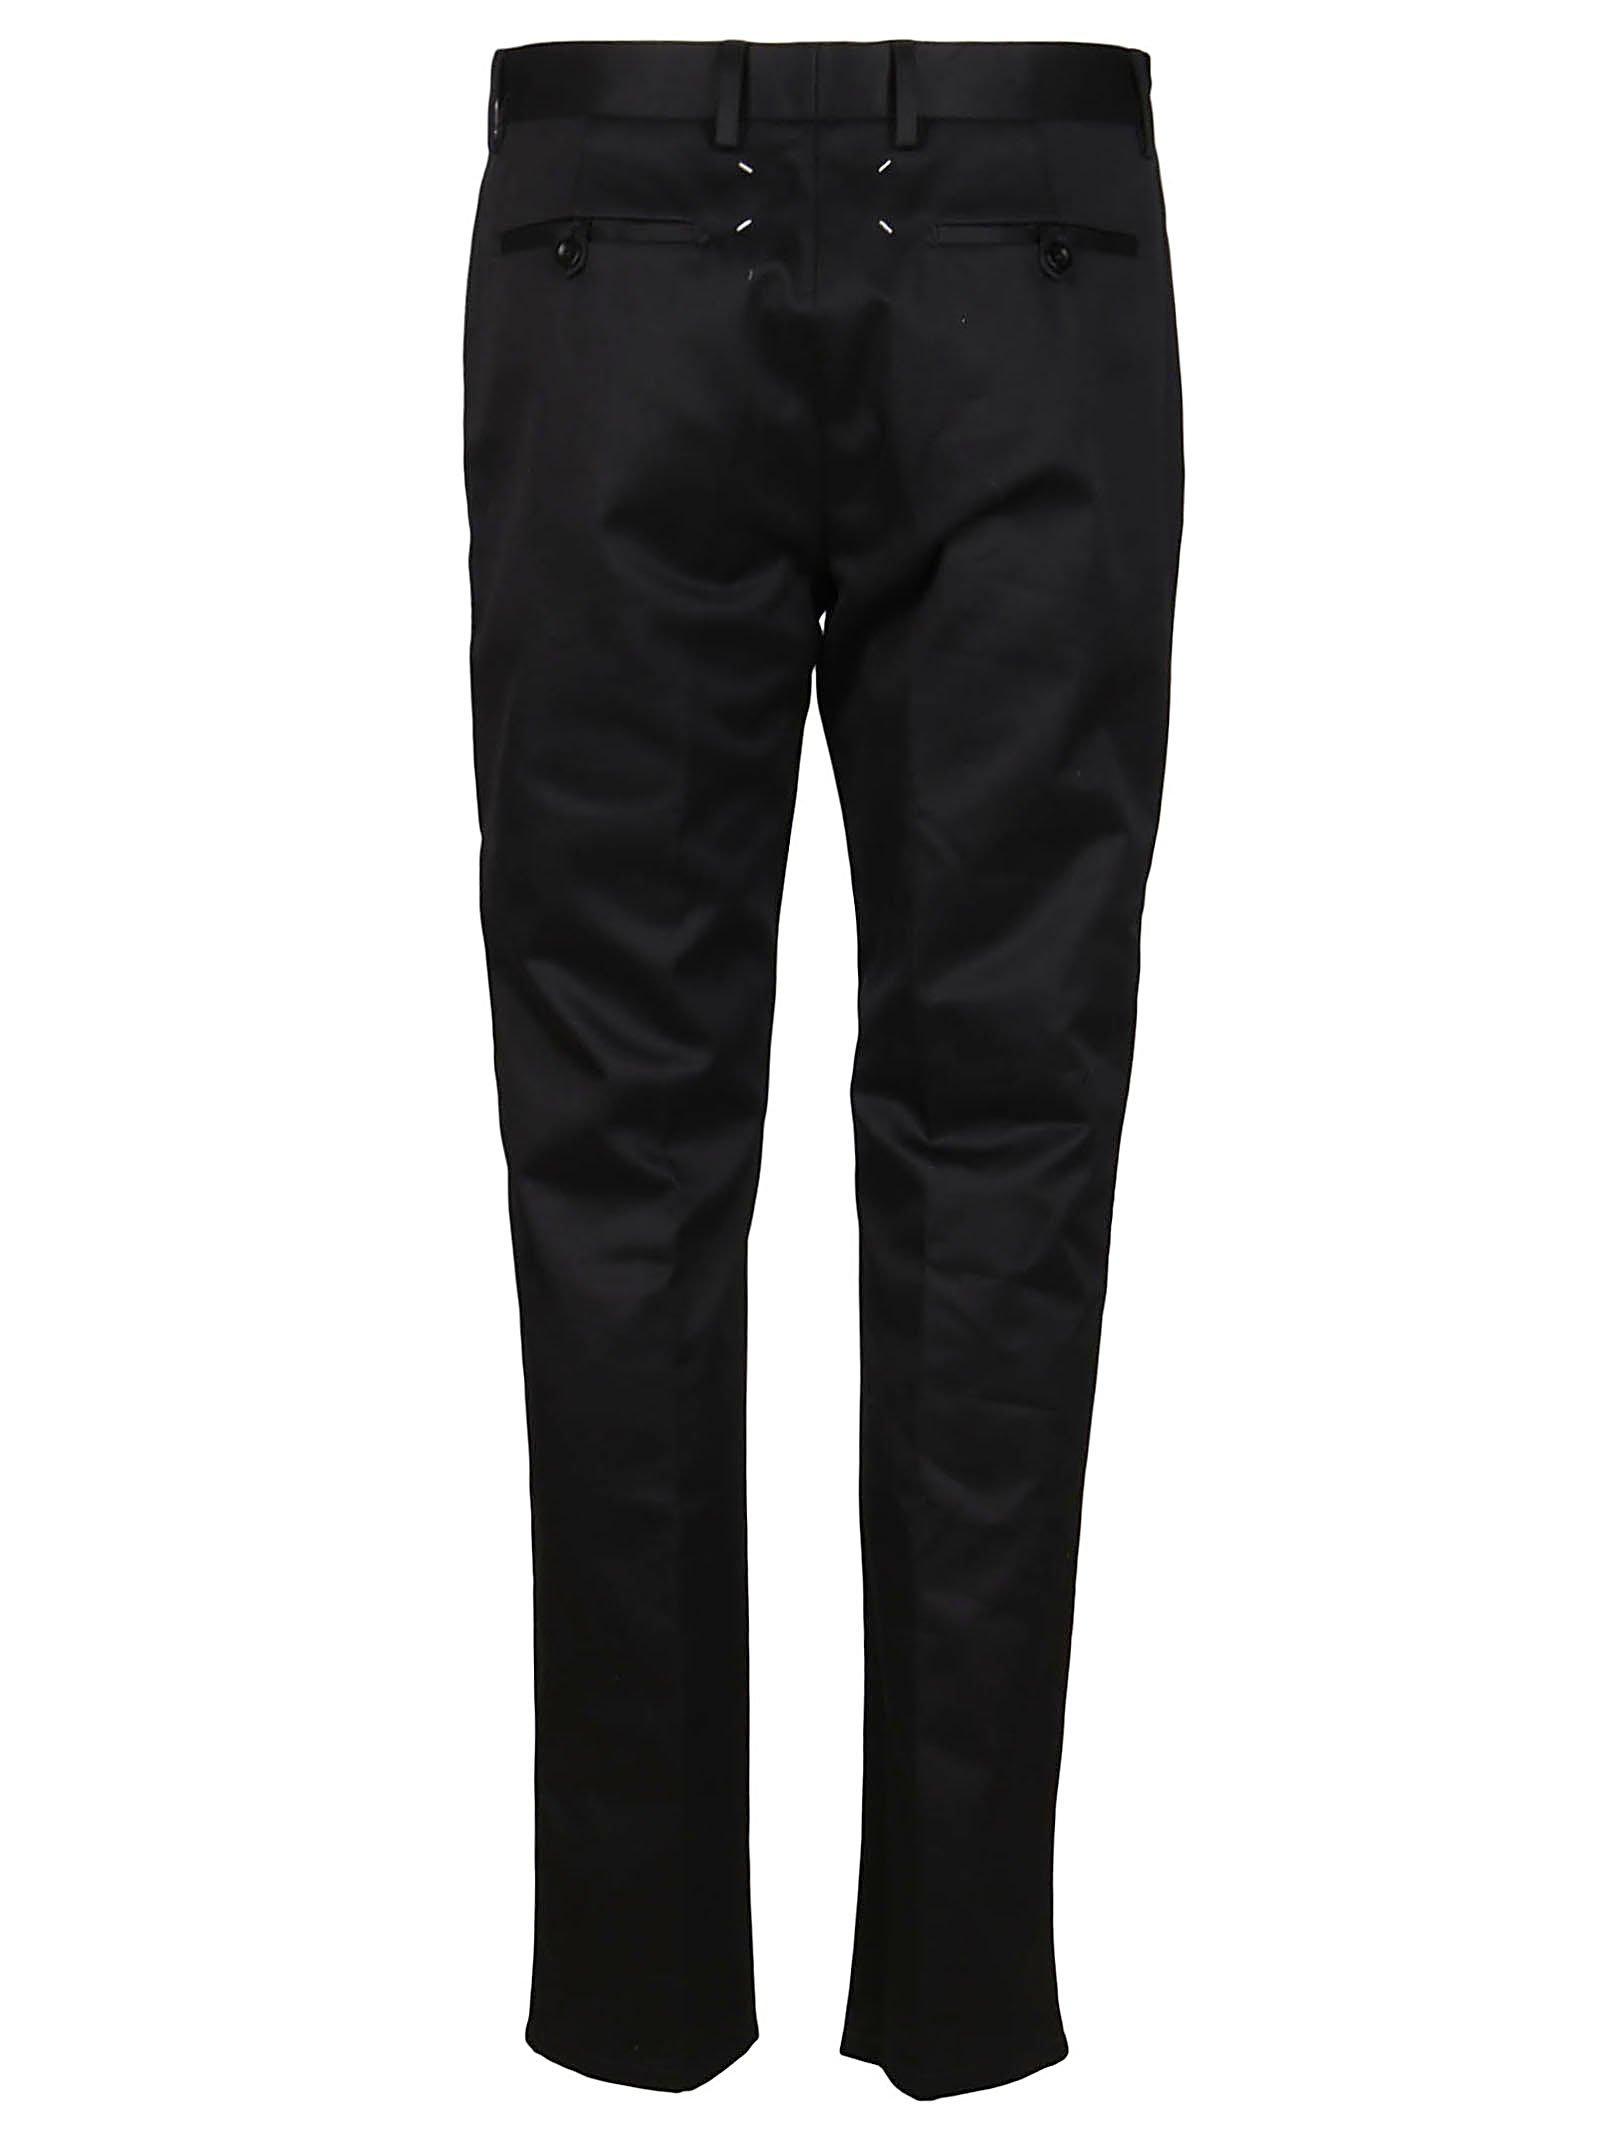 Maison Margiela Cotton Straight Leg Pants in Black for Men - Lyst